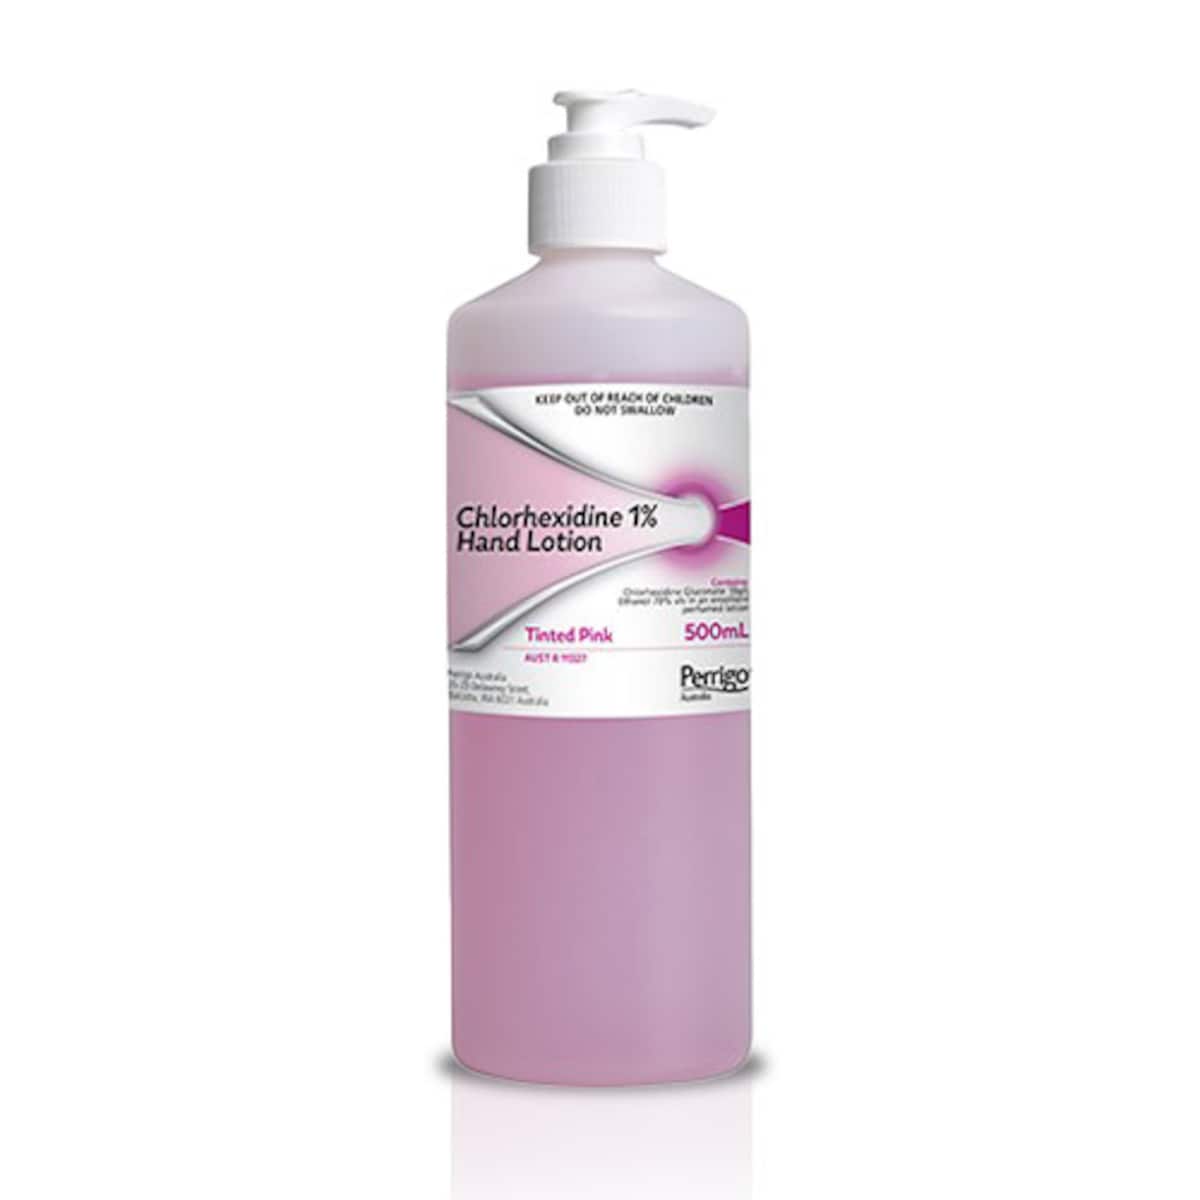 Chlorhexidine 1% Hand Lotion Tinted Pink 500ml